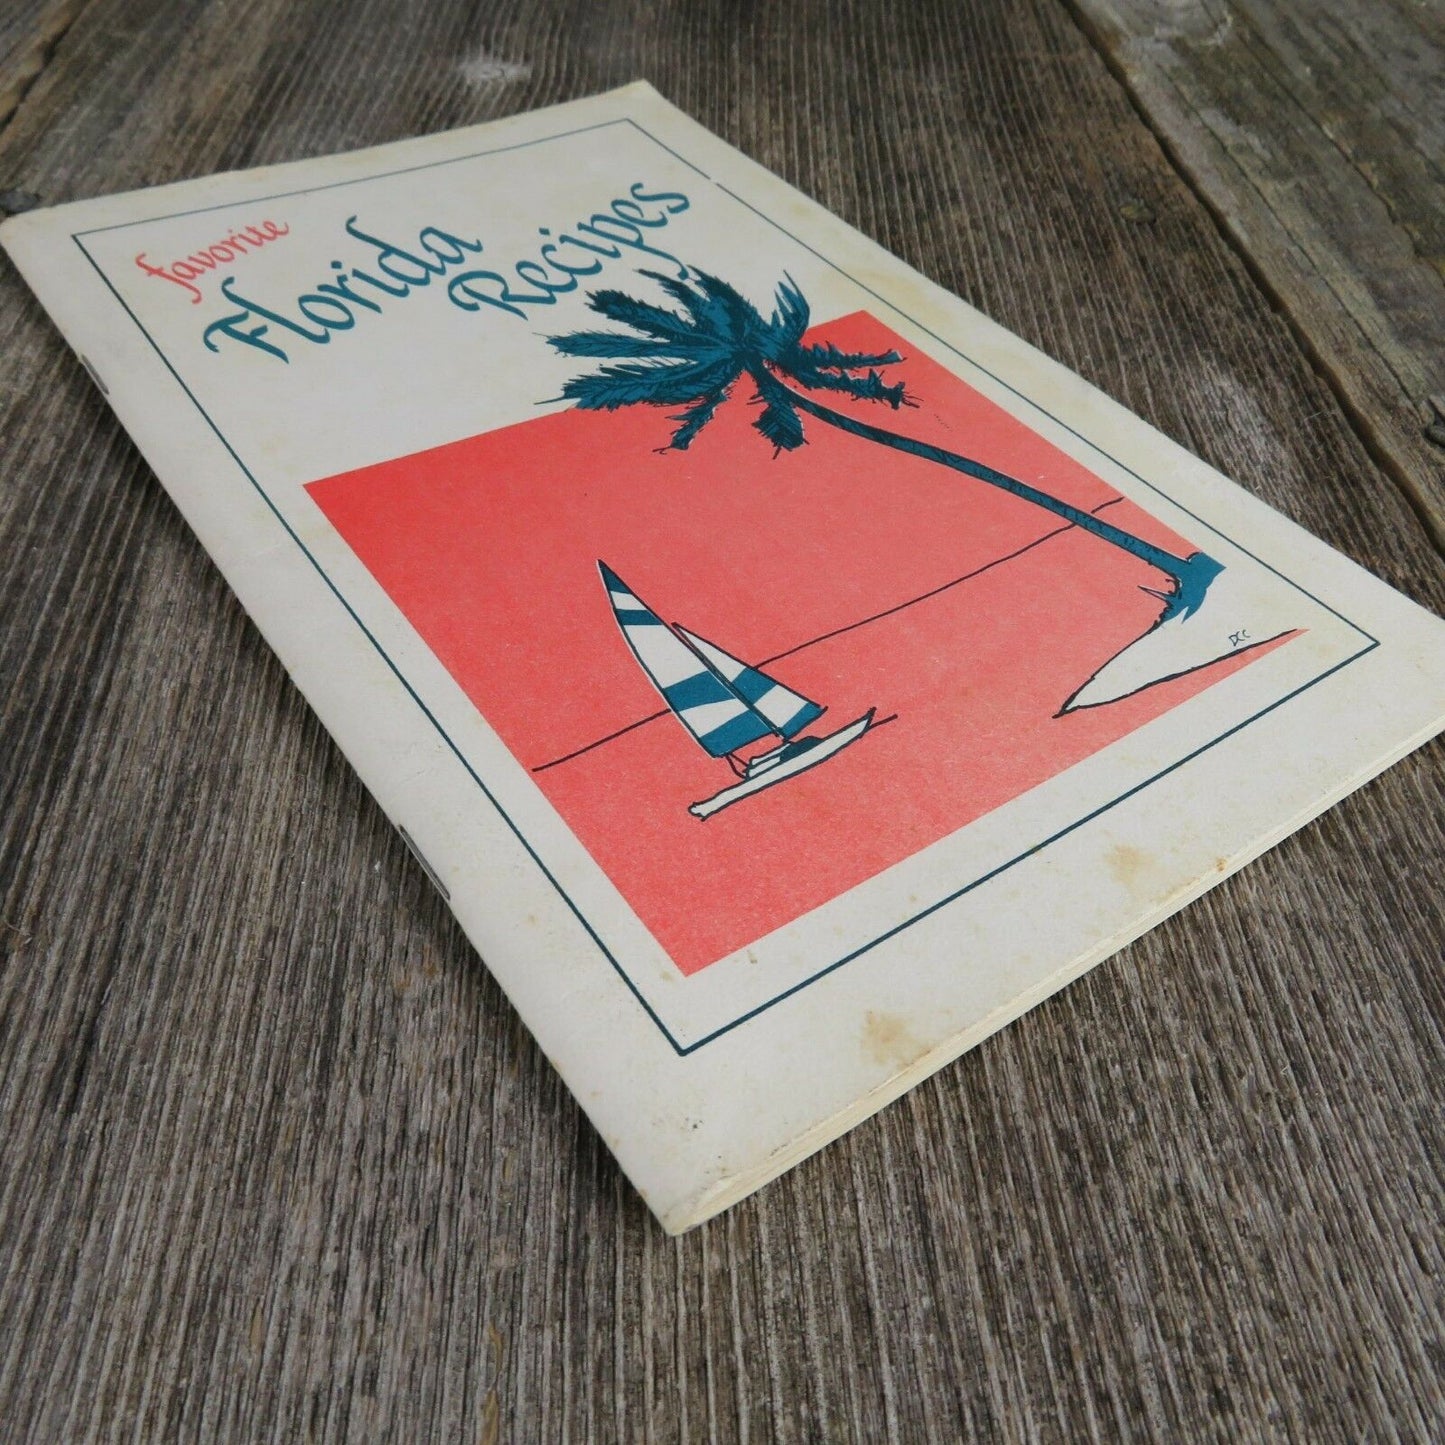 Vintage Favorite Florida Recipes Cookbook Nancy Berzinec 1987 Souvenir - At Grandma's Table